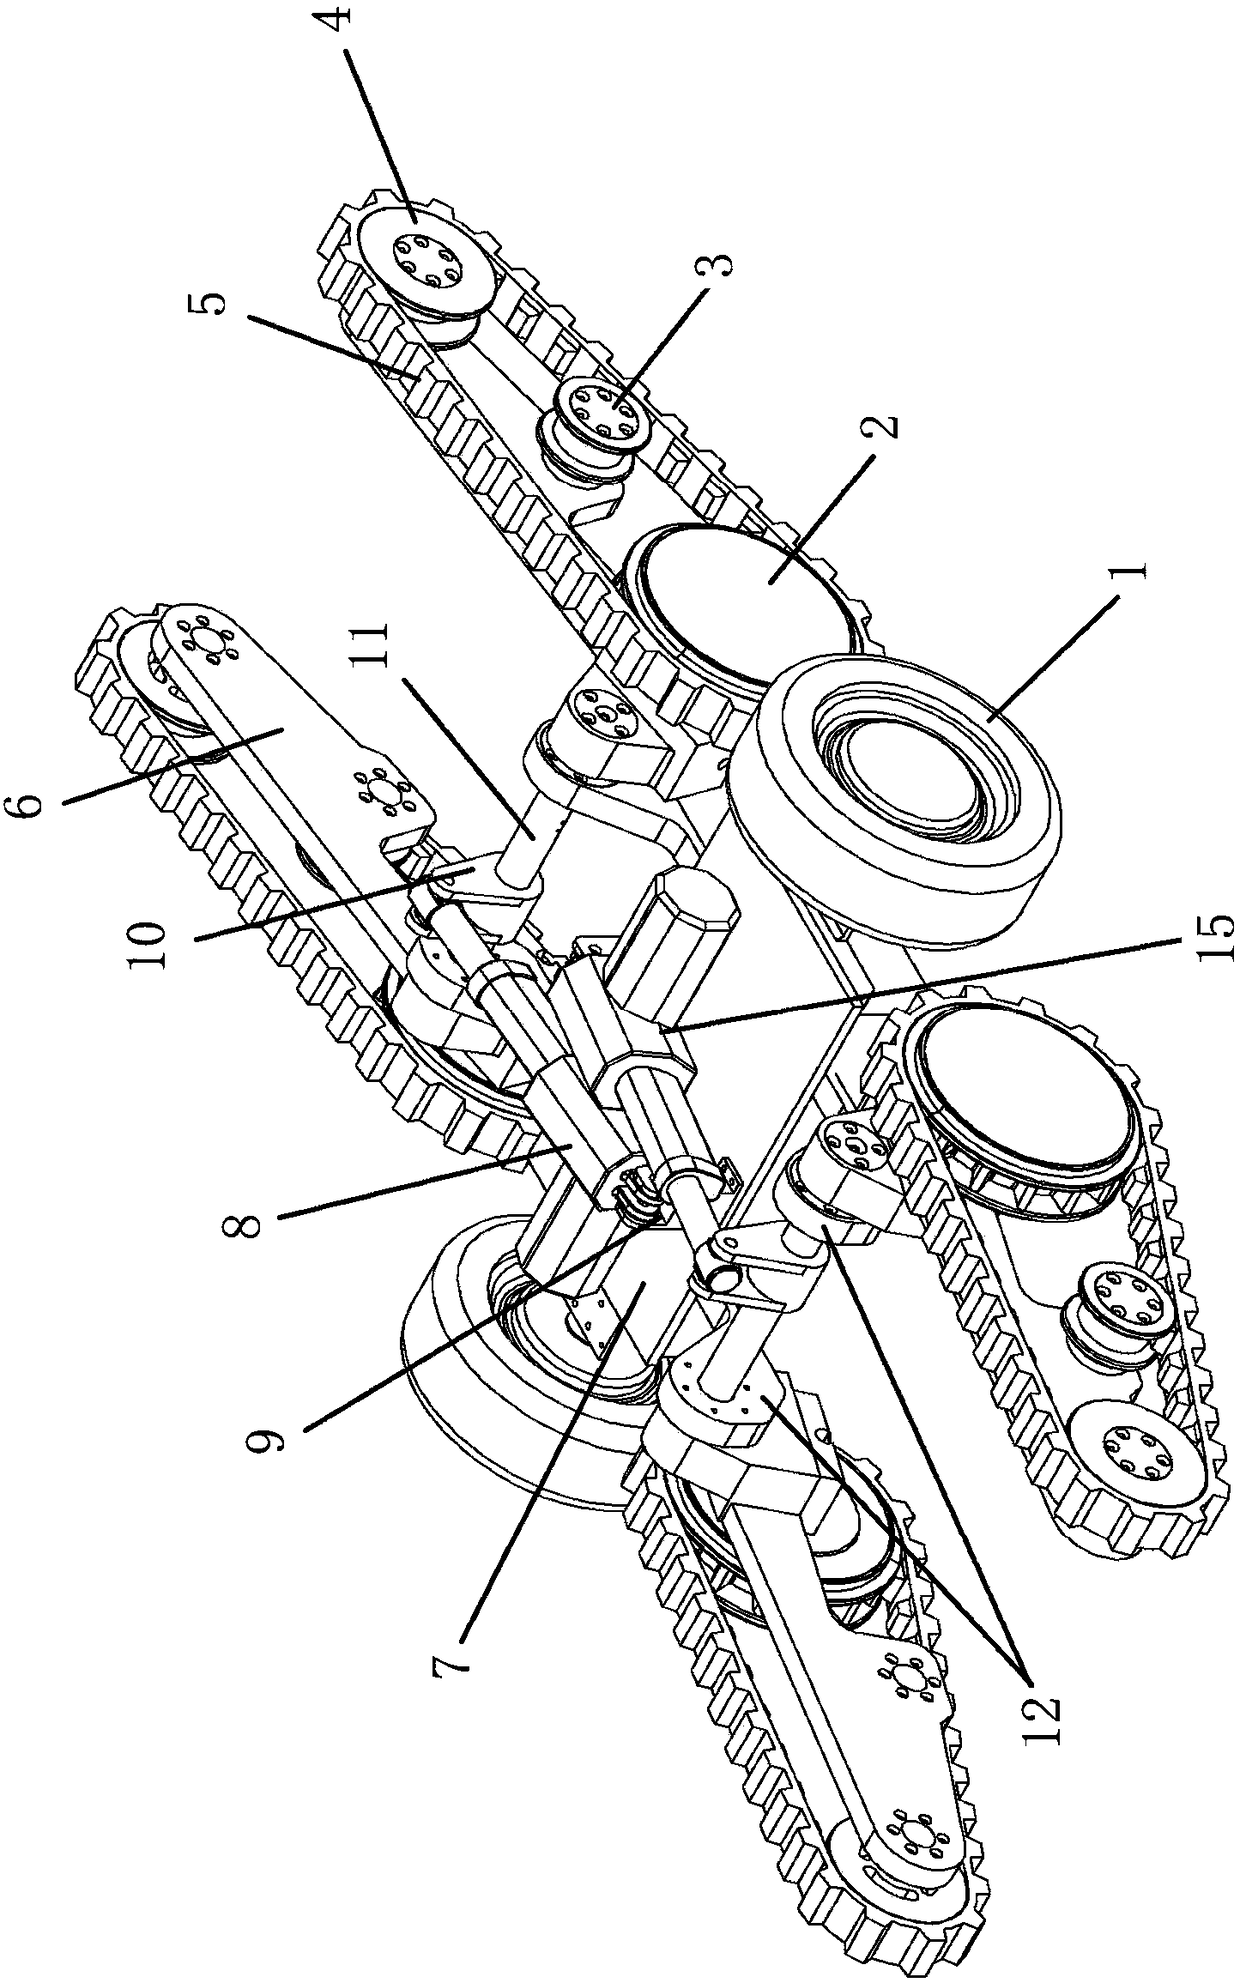 Two-wheel-leg-caterpillar band compound type movement mechanism